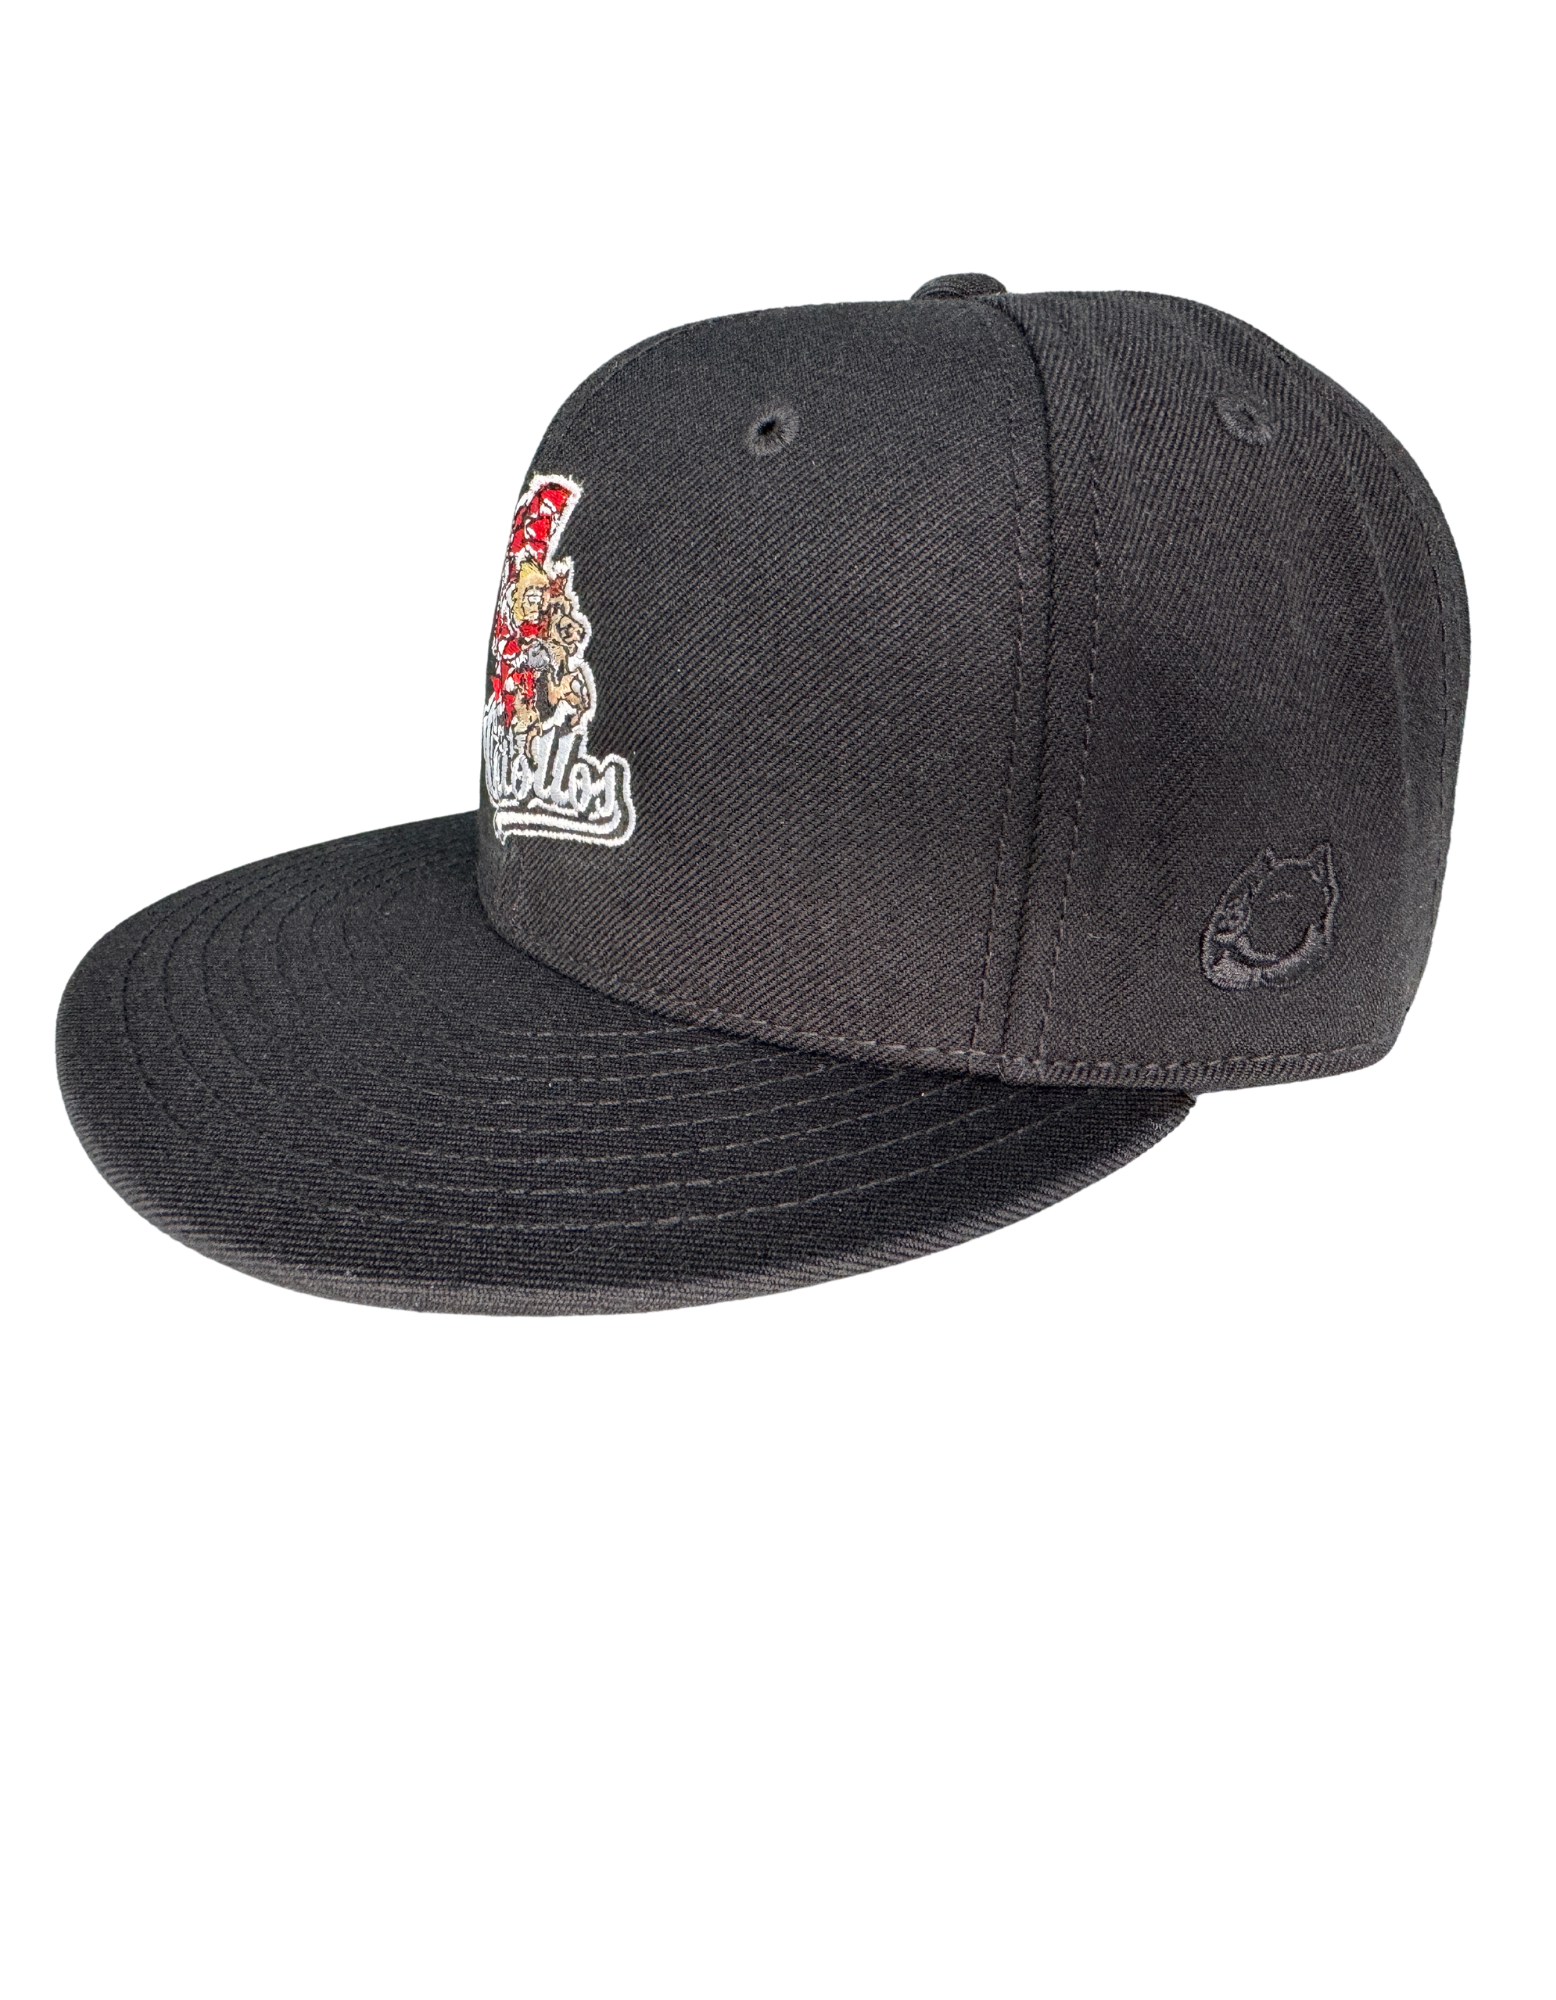 Criollos Baseball Hat  **PRE-ORDER** (Read Description for Details)